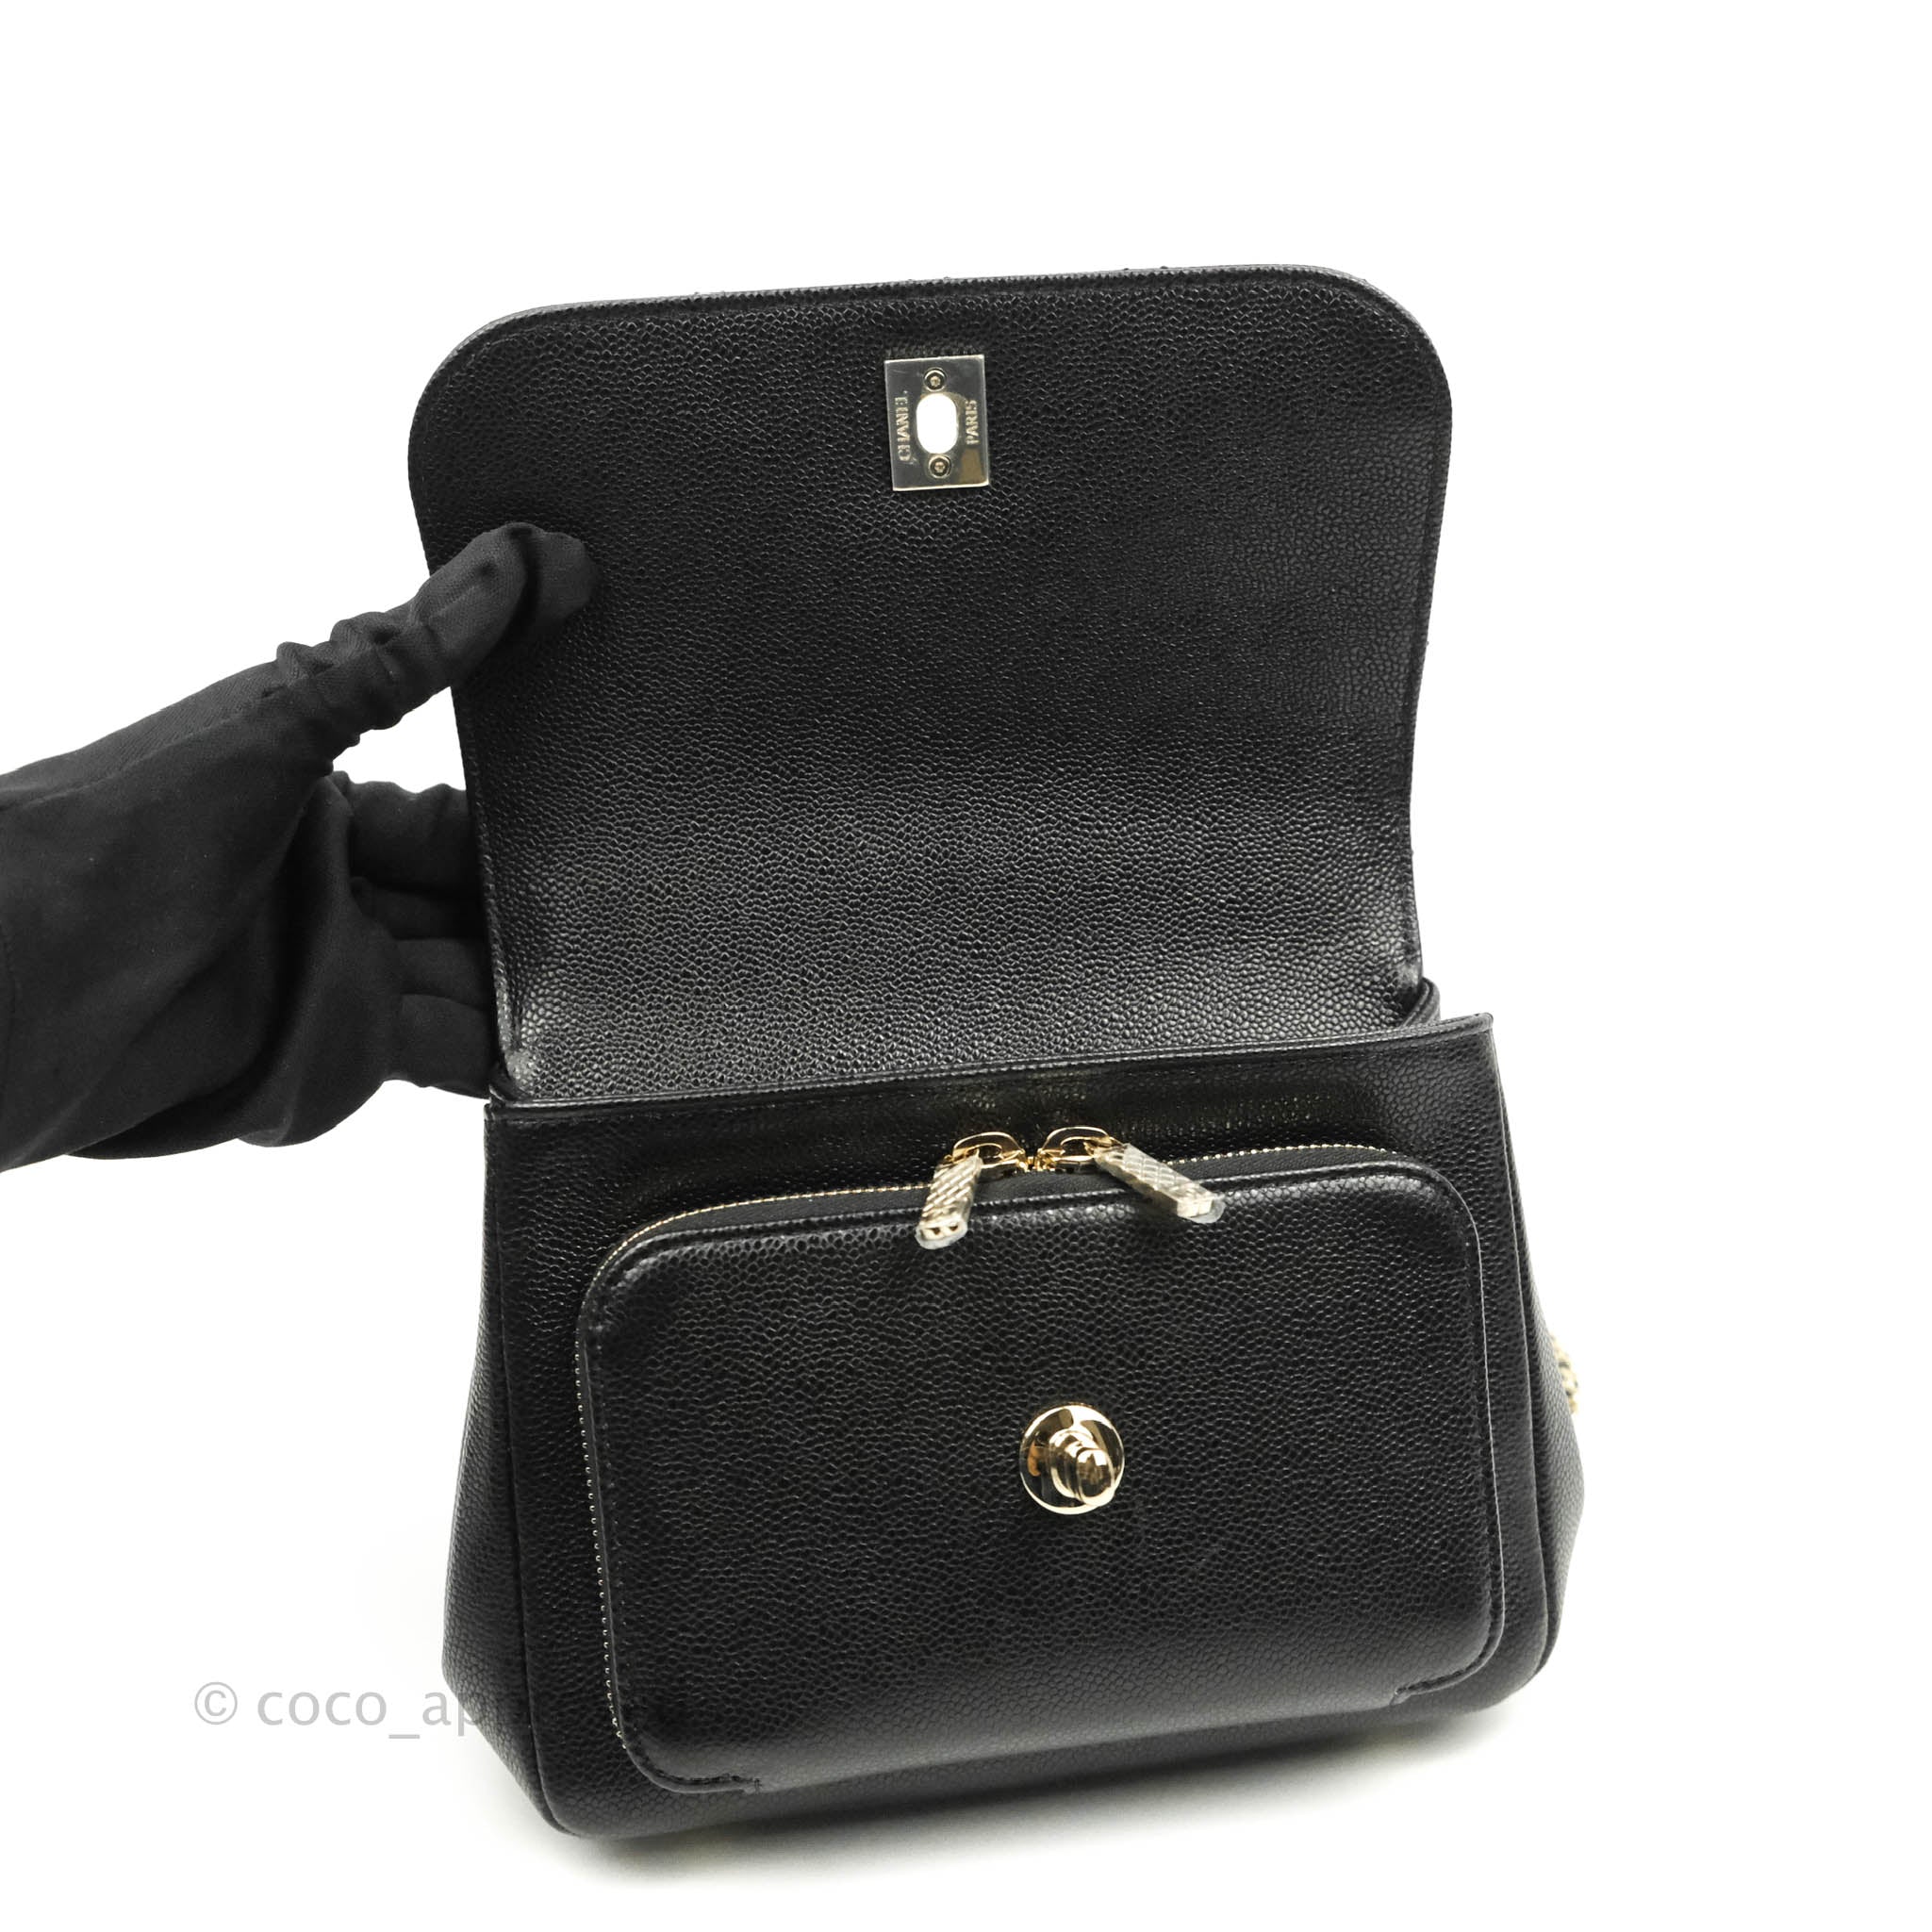 Chanel Small Business Affinity Flap Bag - Grey Shoulder Bags, Handbags -  CHA960760